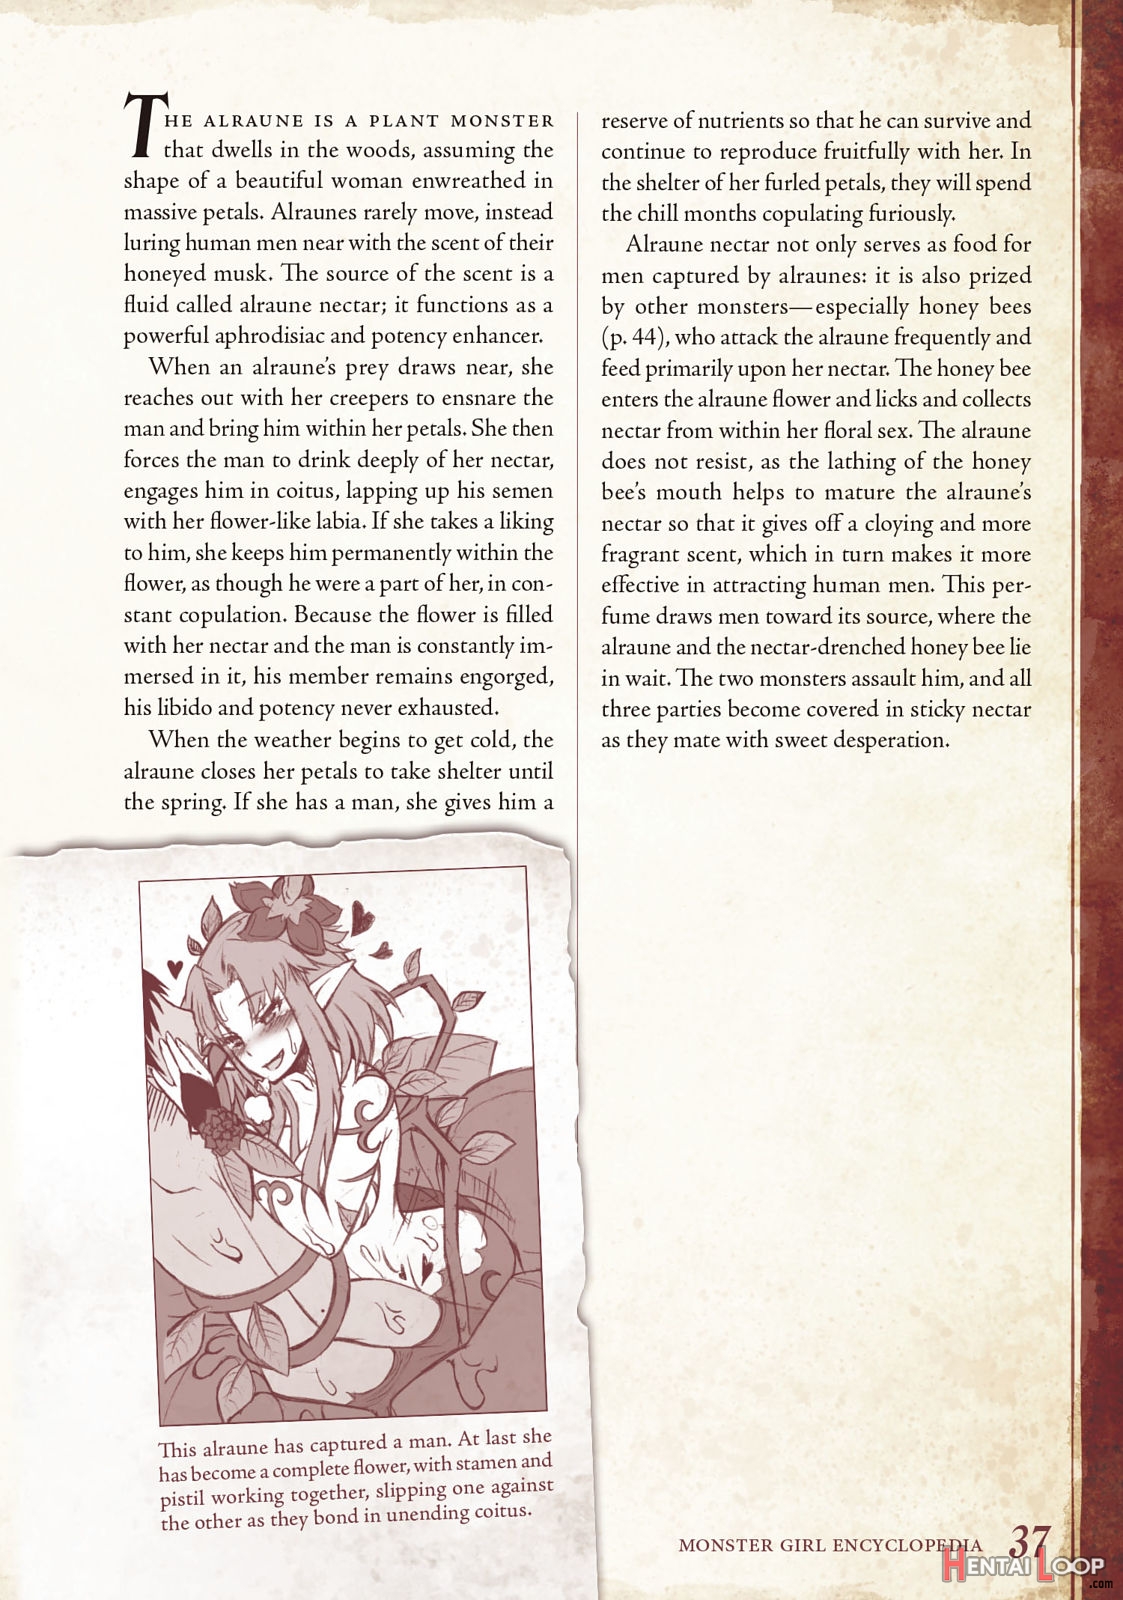 Monster Girl Encyclopedia Vol. 1 page 38